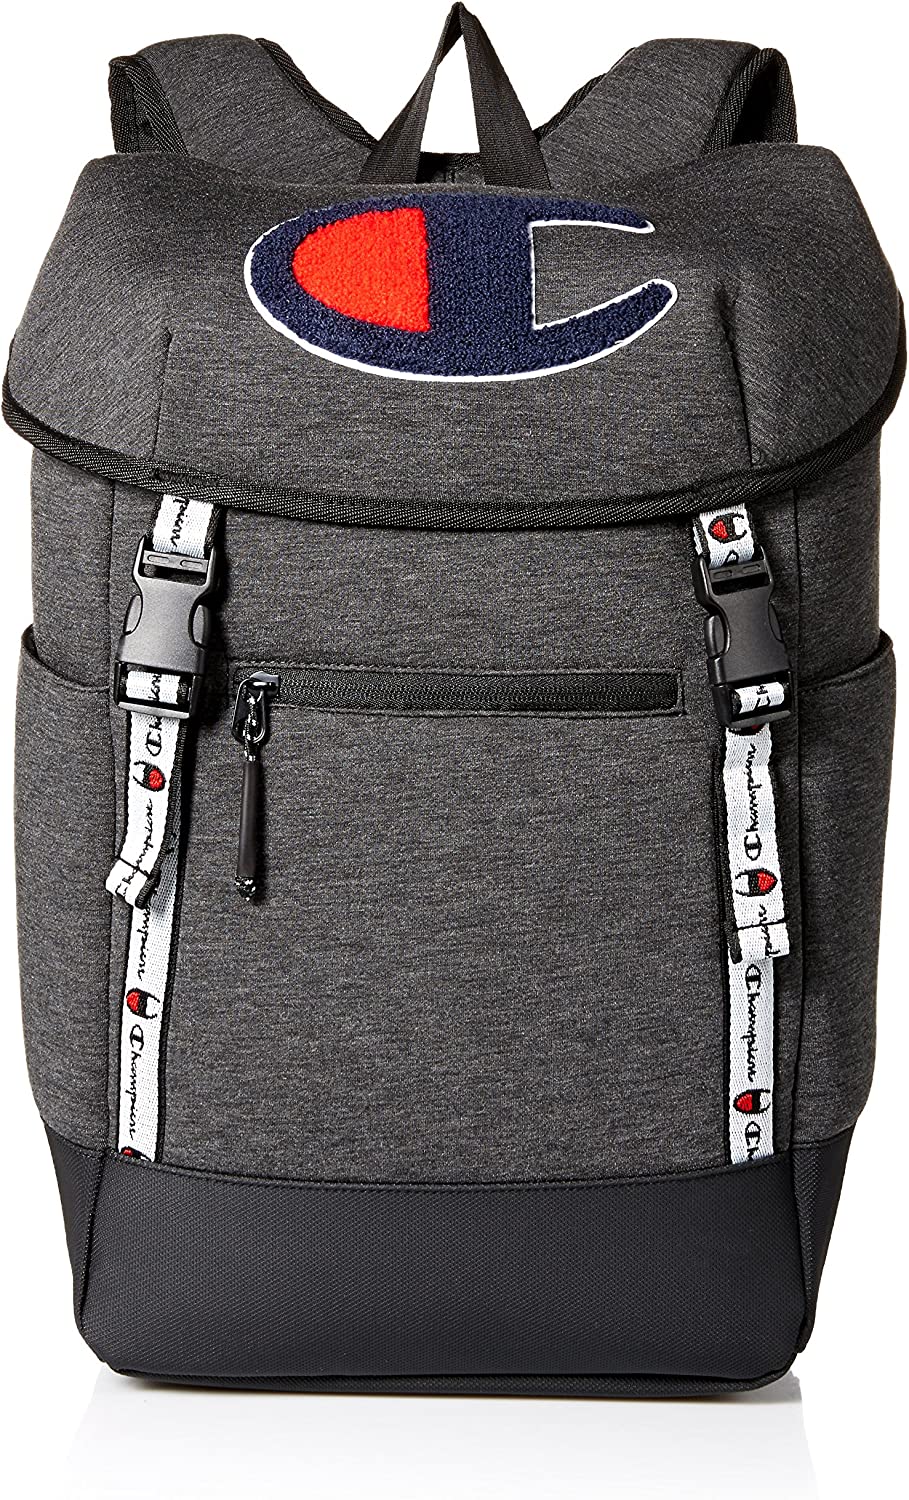 Champion Top Load Backpack (Dark Grey) $36 + Free Shipping $35